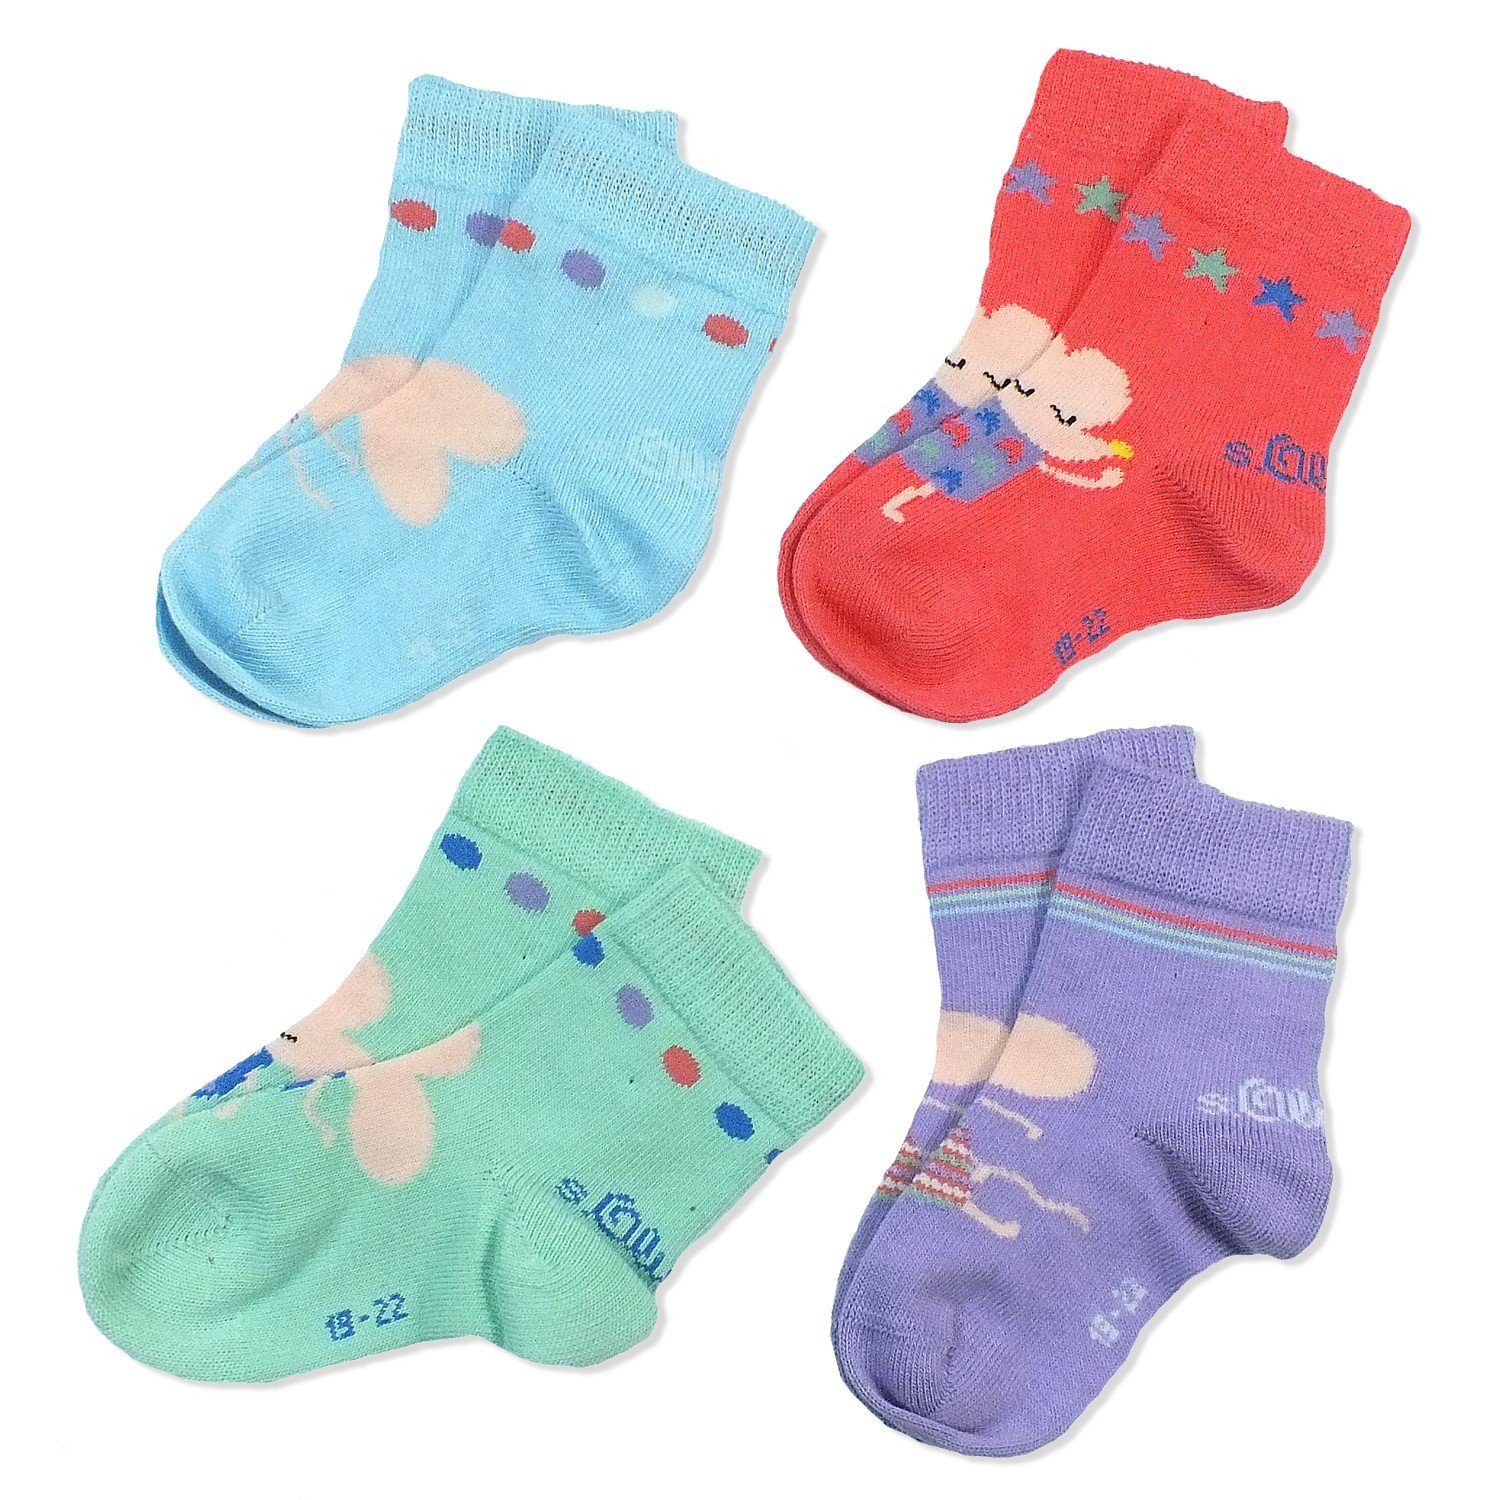 s.Oliver Langsocken S20341 (Set, 4-Paar, 4 Paar) Kinder Socken, Baby Jungen & Mädchen mit Baumwolle, Kindersocken